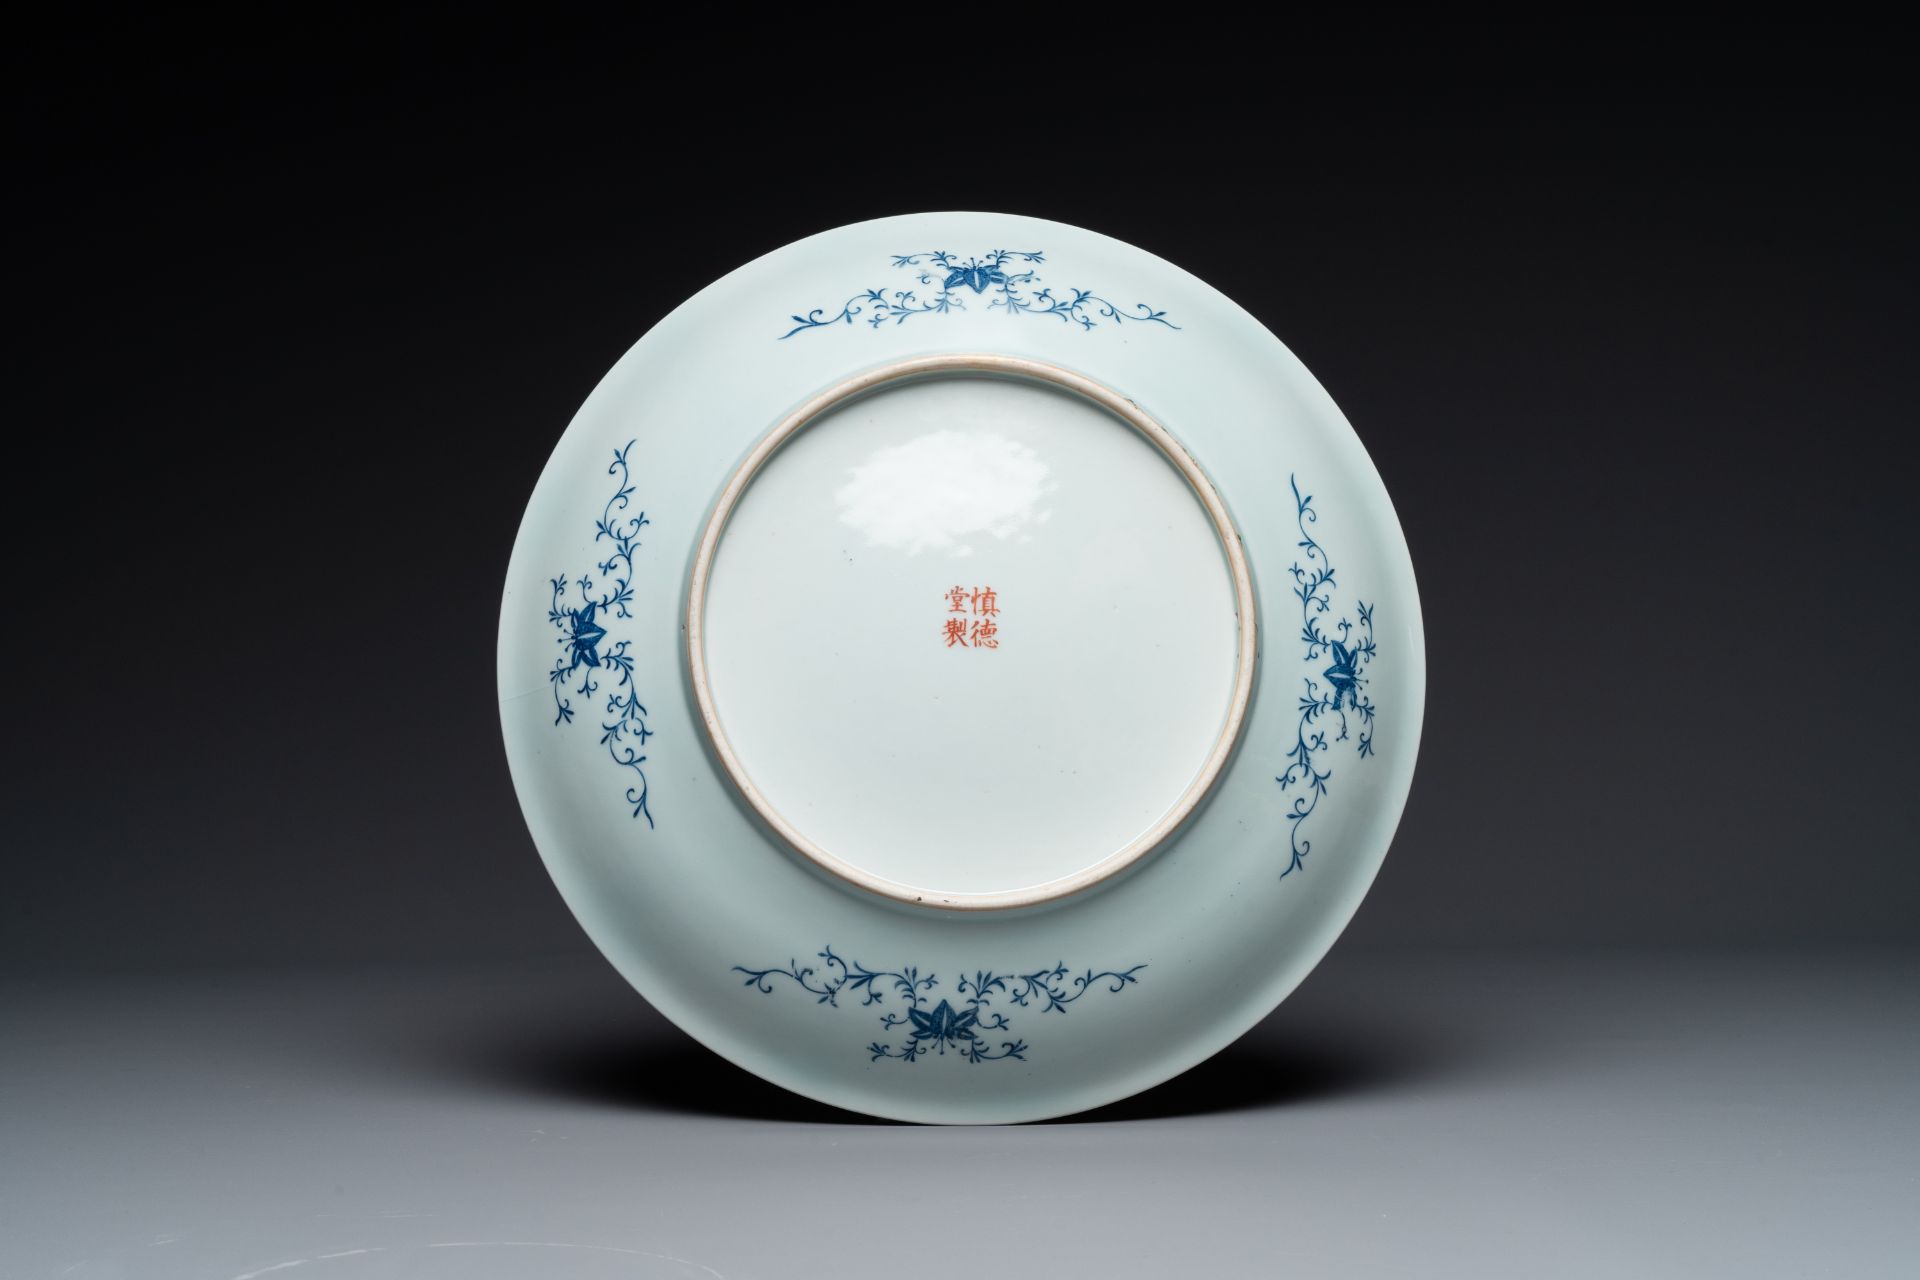 Two Chinese famille rose dishes, Kangxi and Shen De Tang æ…Žå¾·å ‚ mark, 19th C. - Image 3 of 5